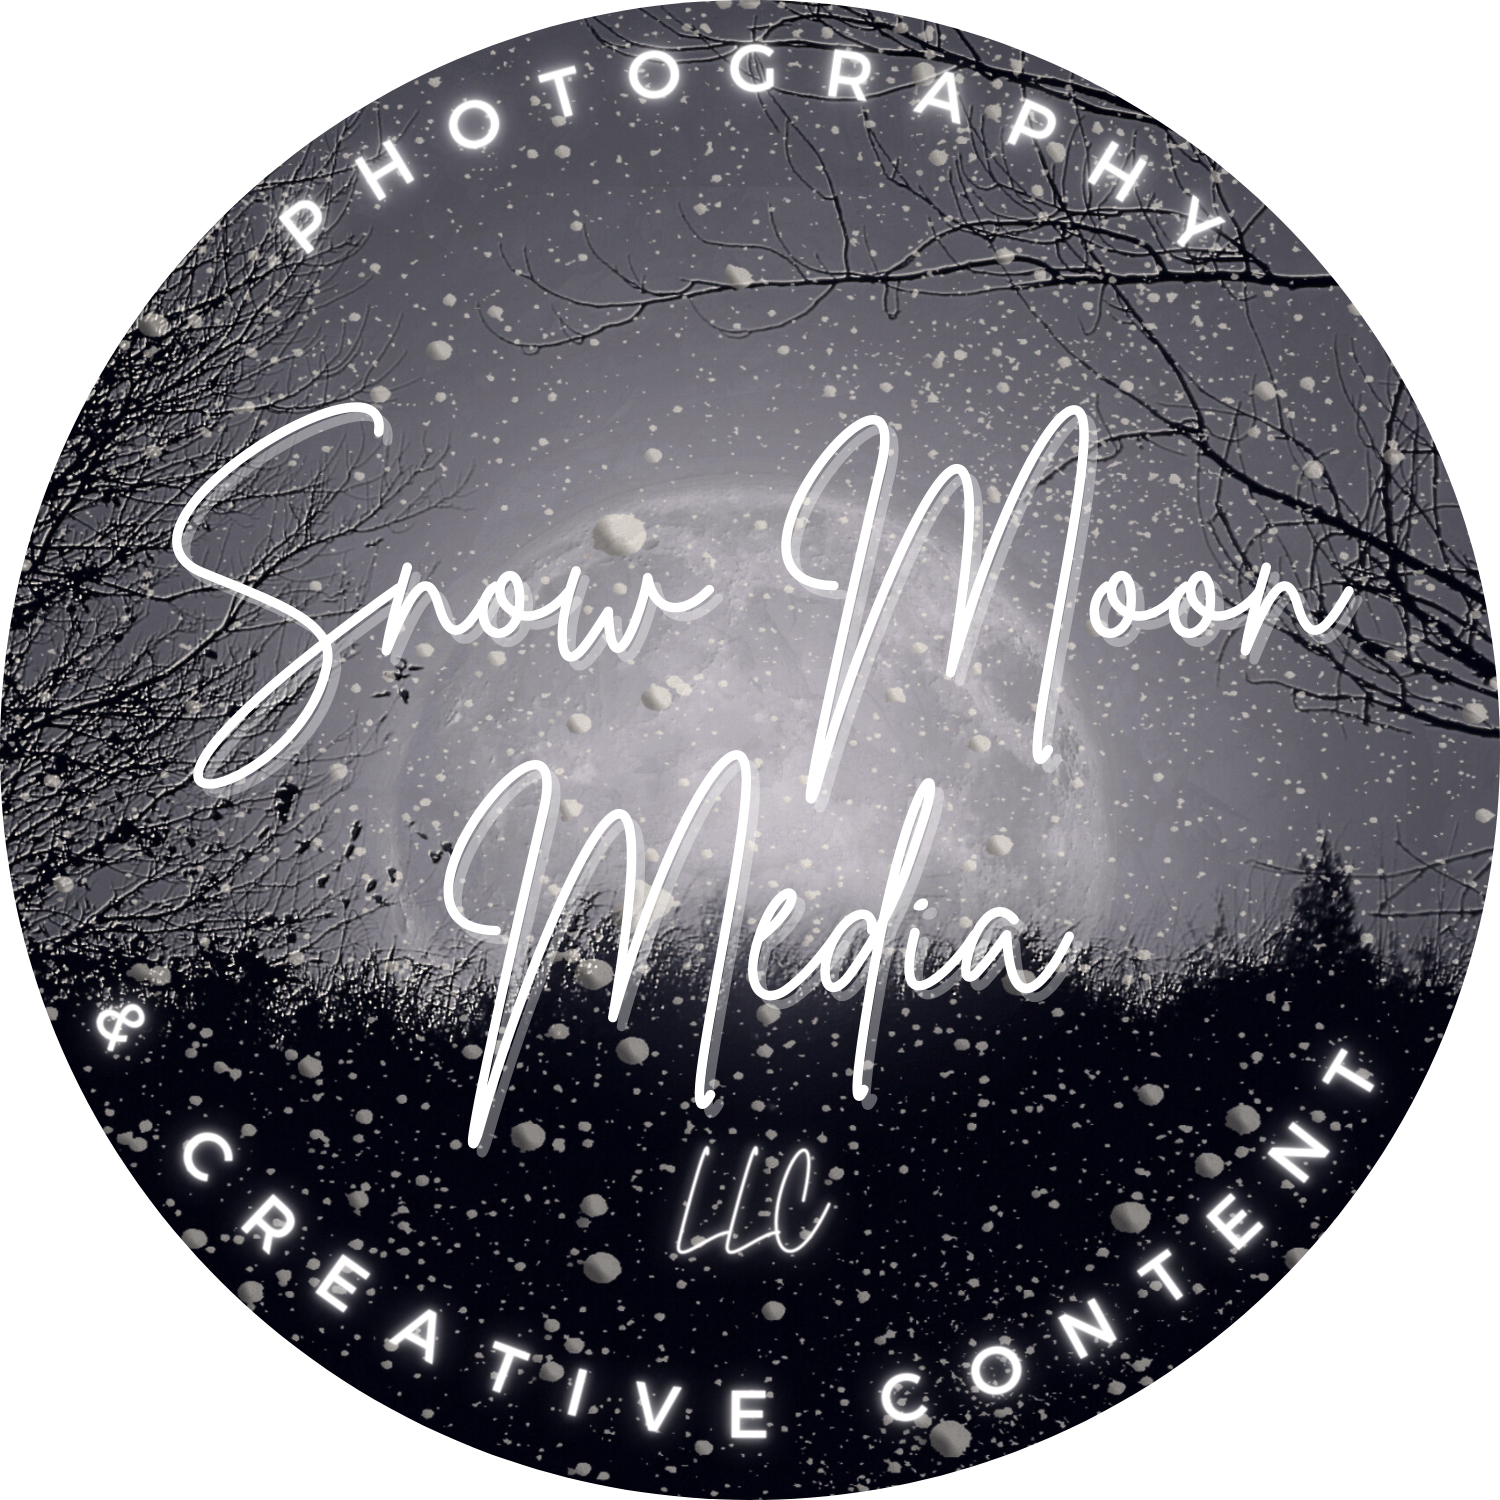 Snow Moon Media LLC